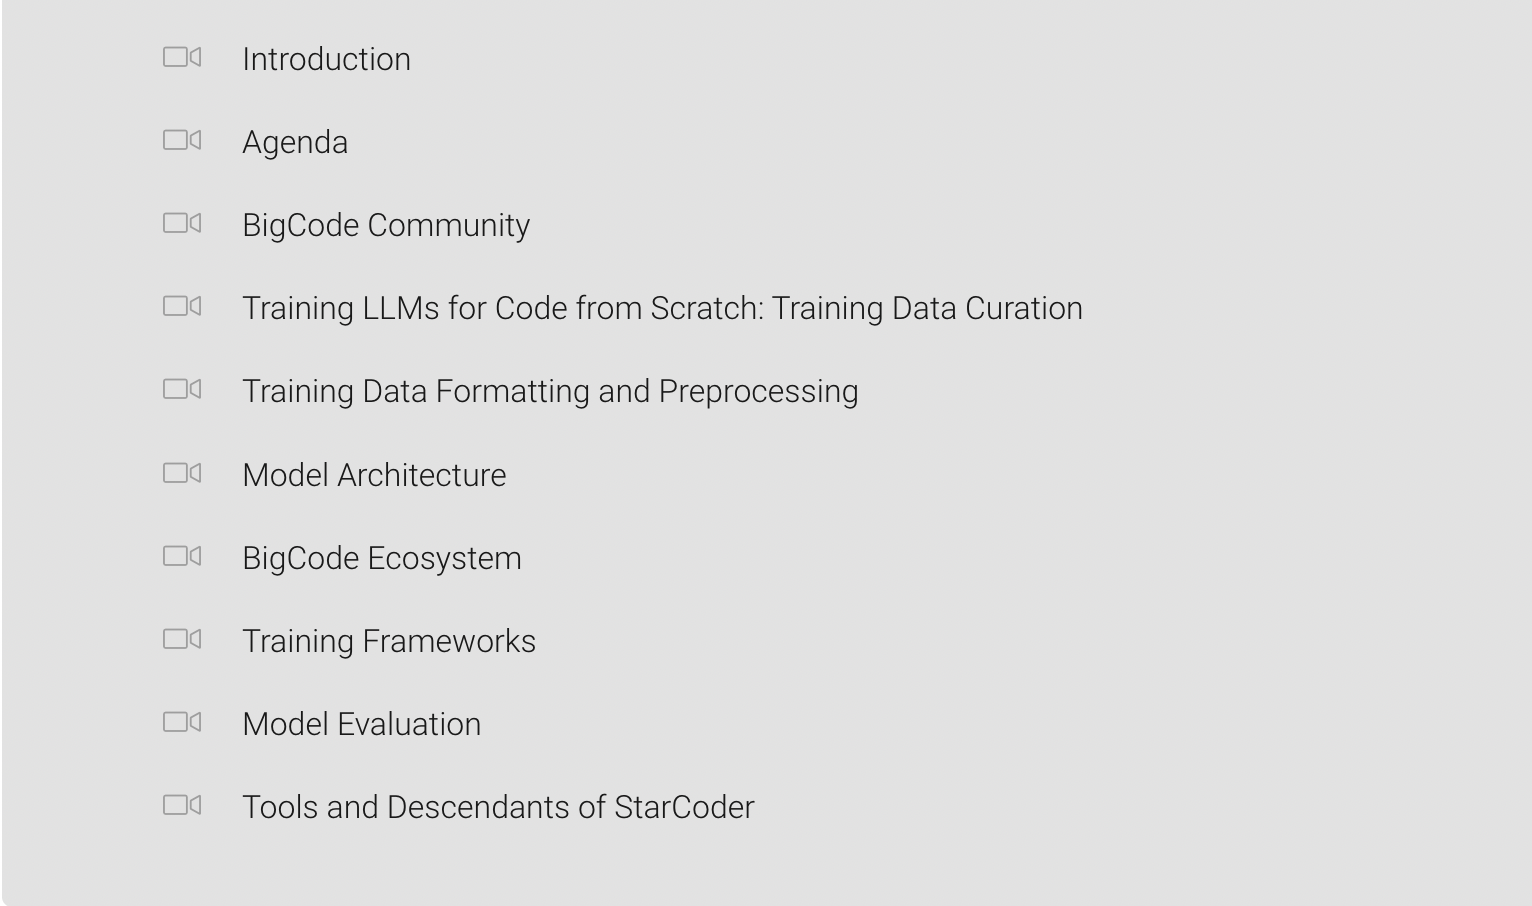 Build LLMs for Code 